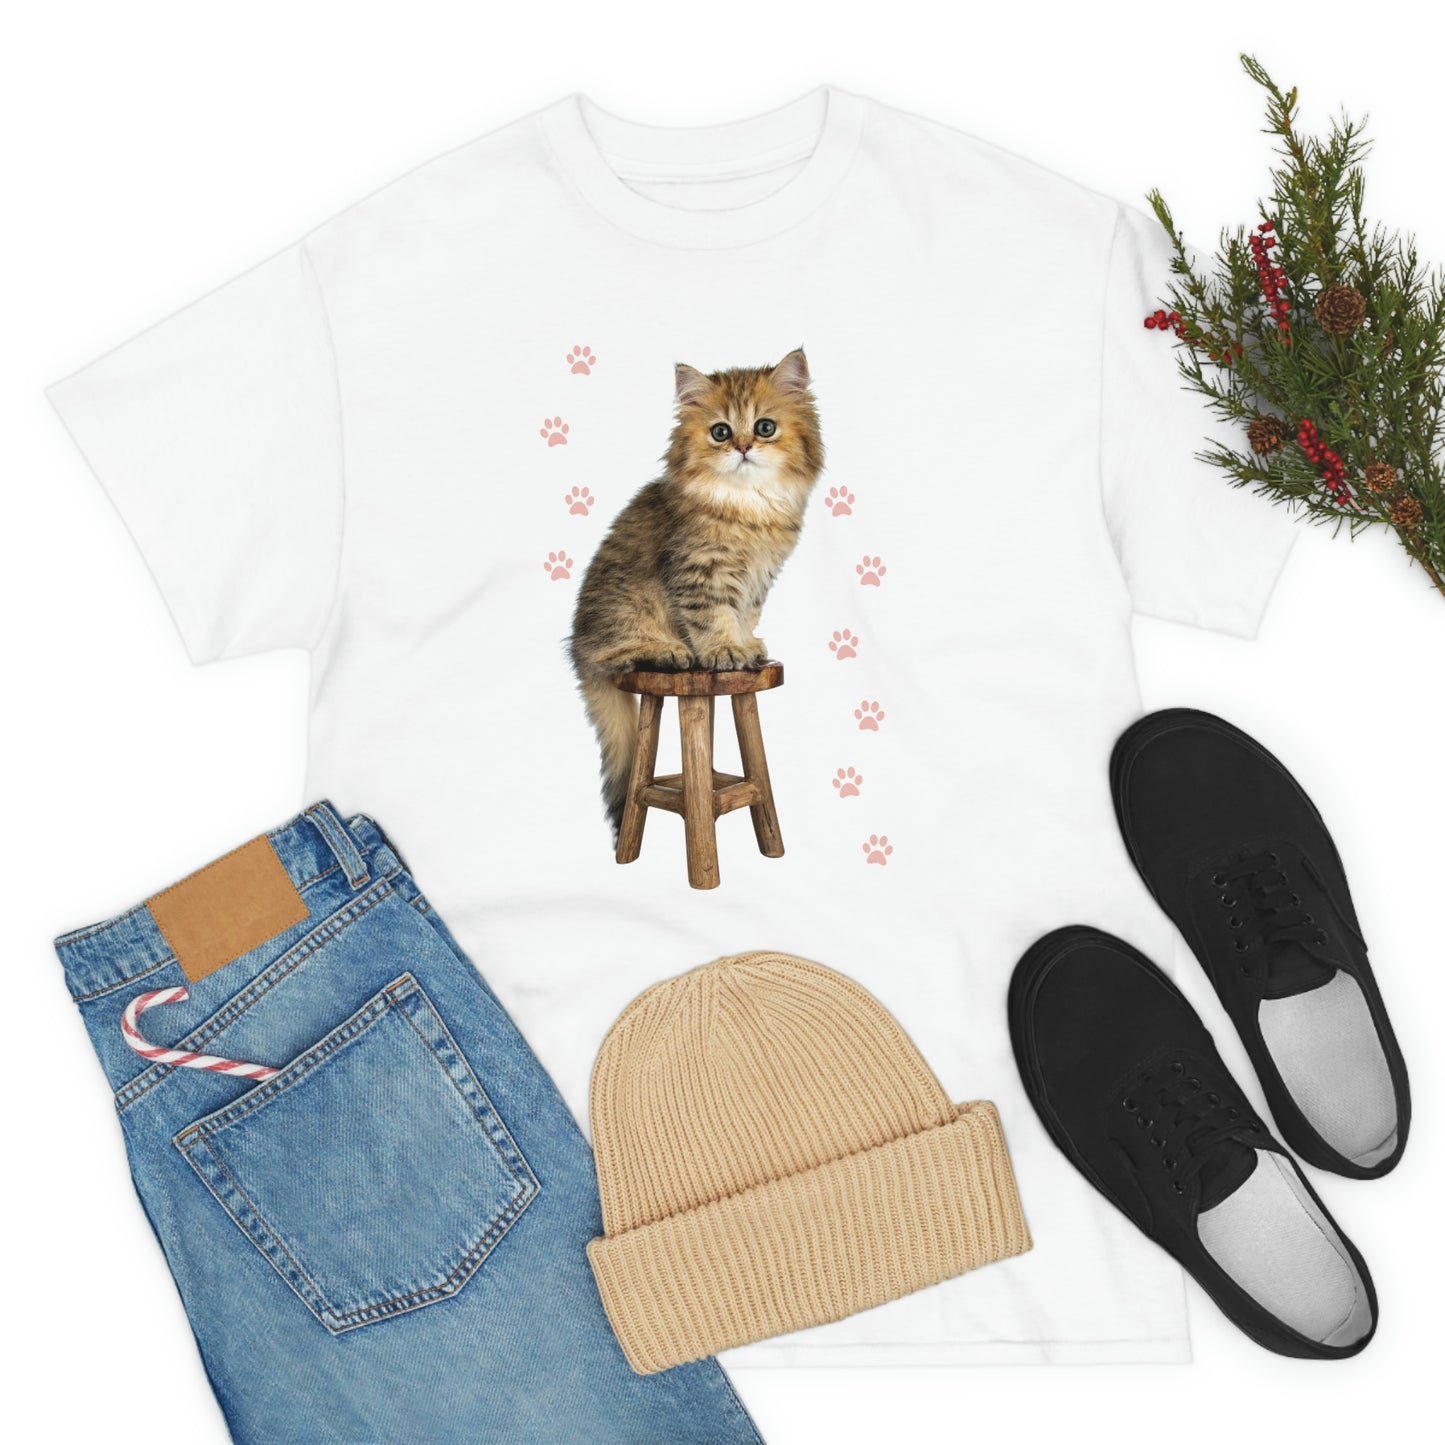 Cute Kitten/Cat sitting on Chair Graphic tee shirt